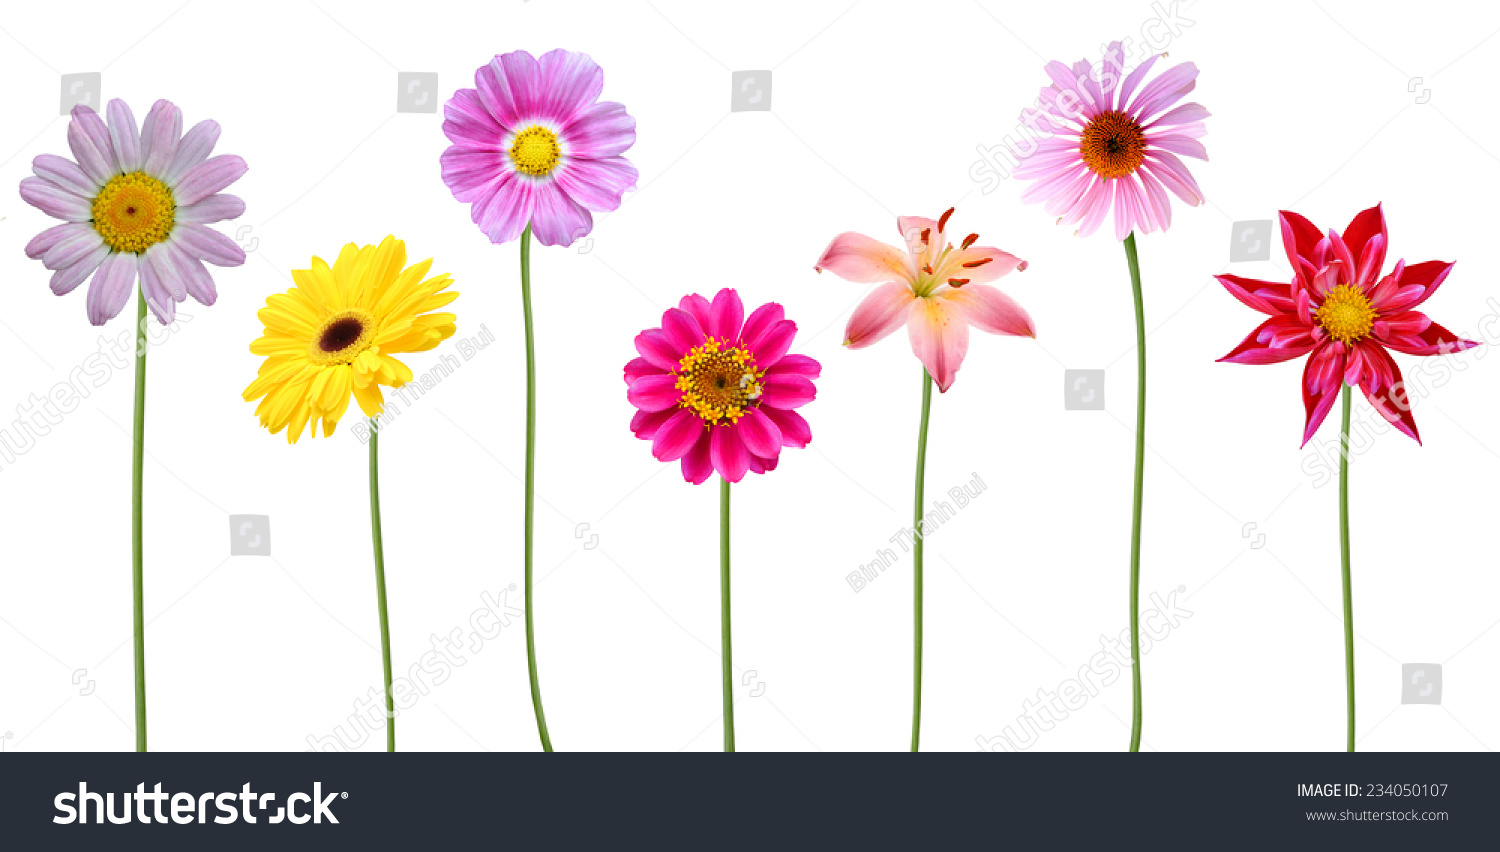 8,262 Different kinds flowers Images, Stock Photos & Vectors | Shutterstock